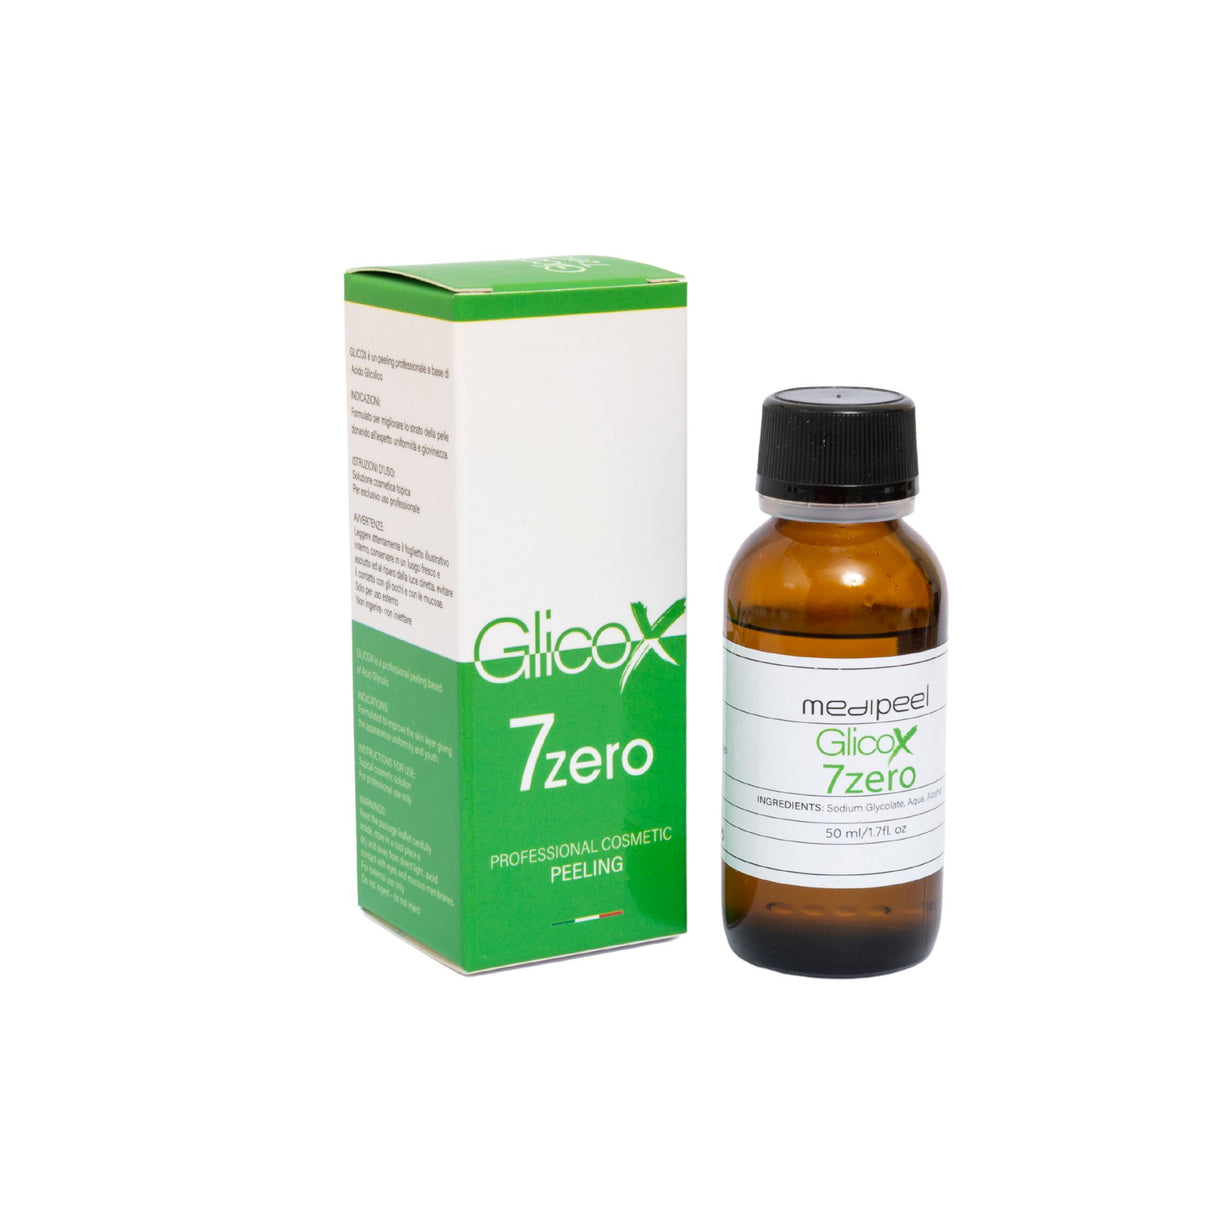 Glicox 7 zero - Filler Lux™ - PEELING - Medixa